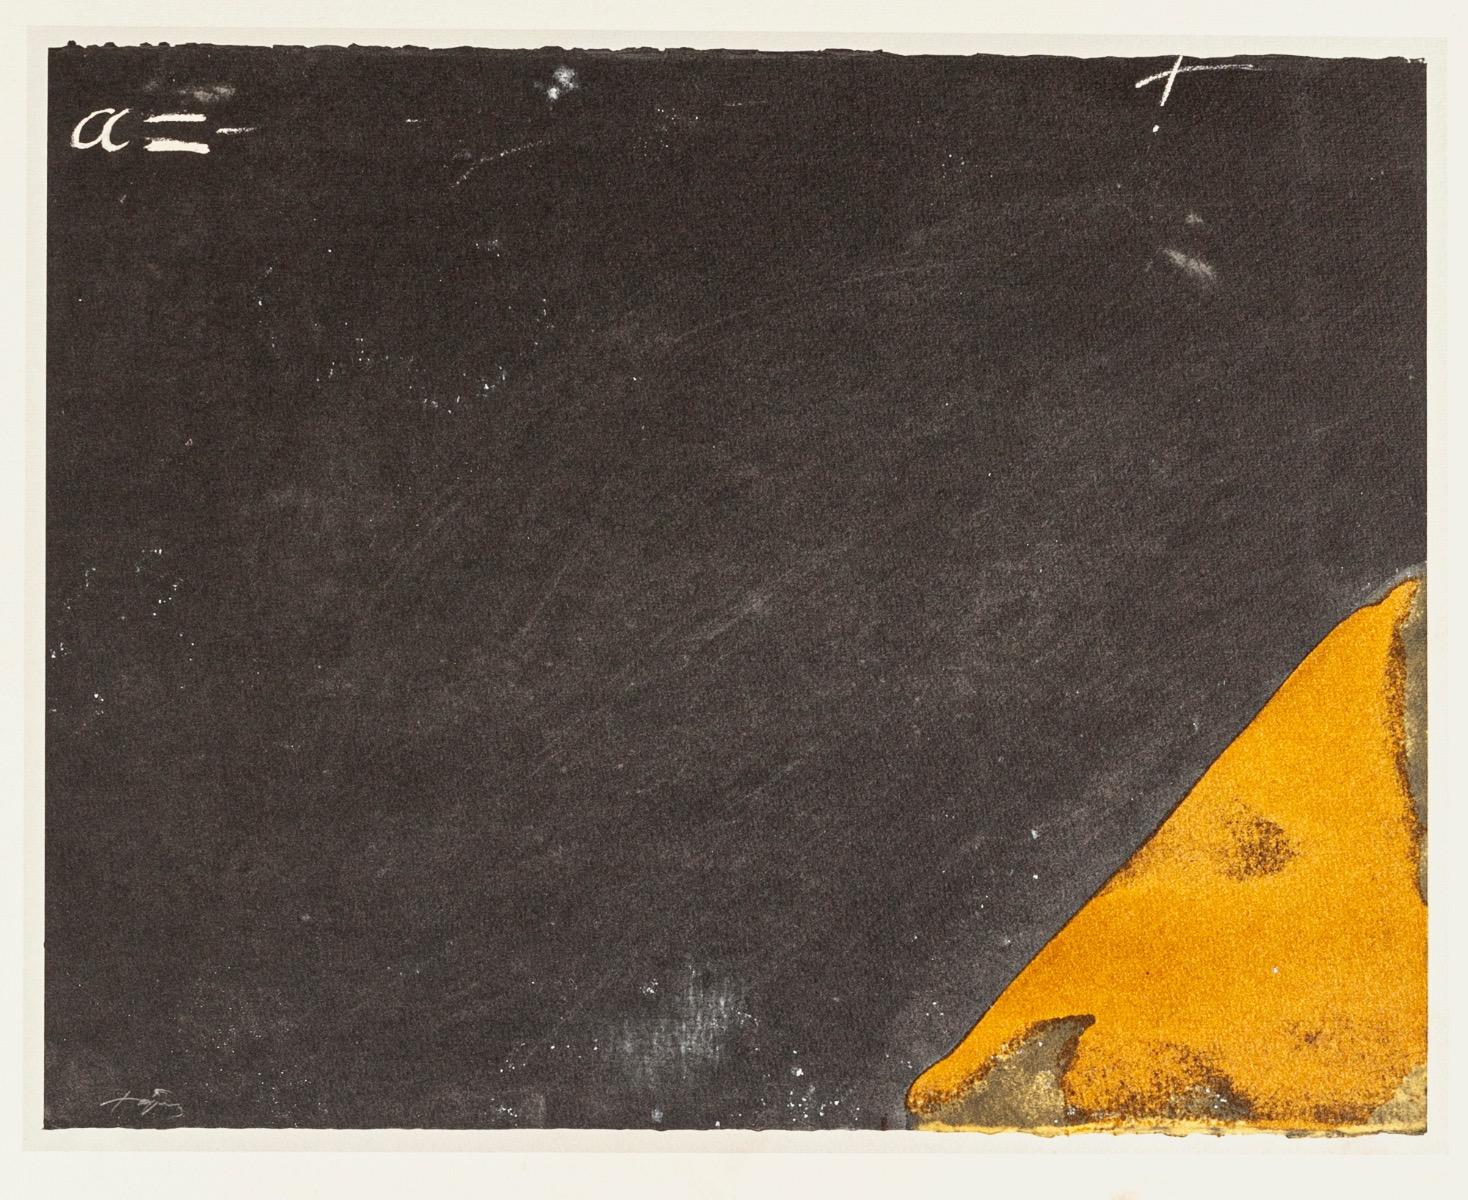 Angle - Vintage Offset Print After Antoni Tàpies - 1982